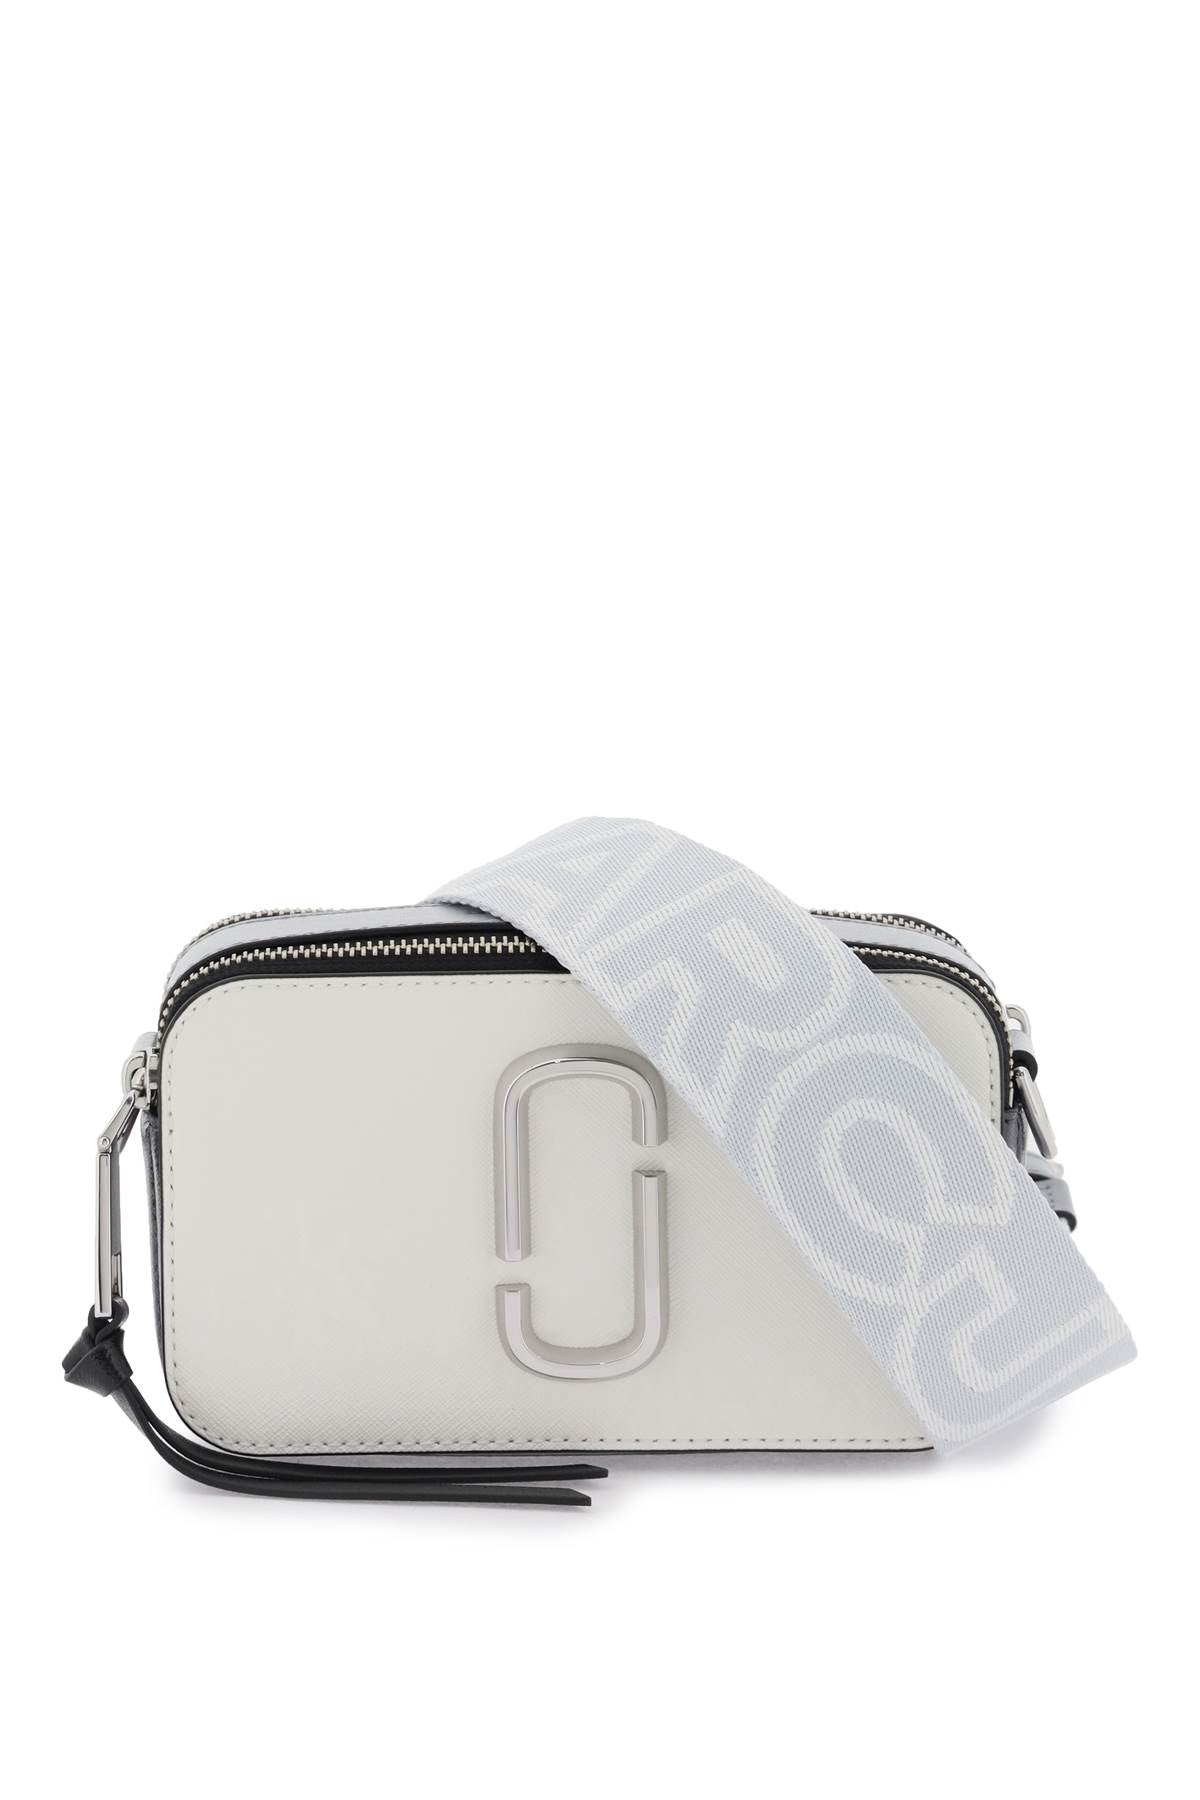 Marc Jacobs Women's Logo Strap Snapshot Small Camera Bag